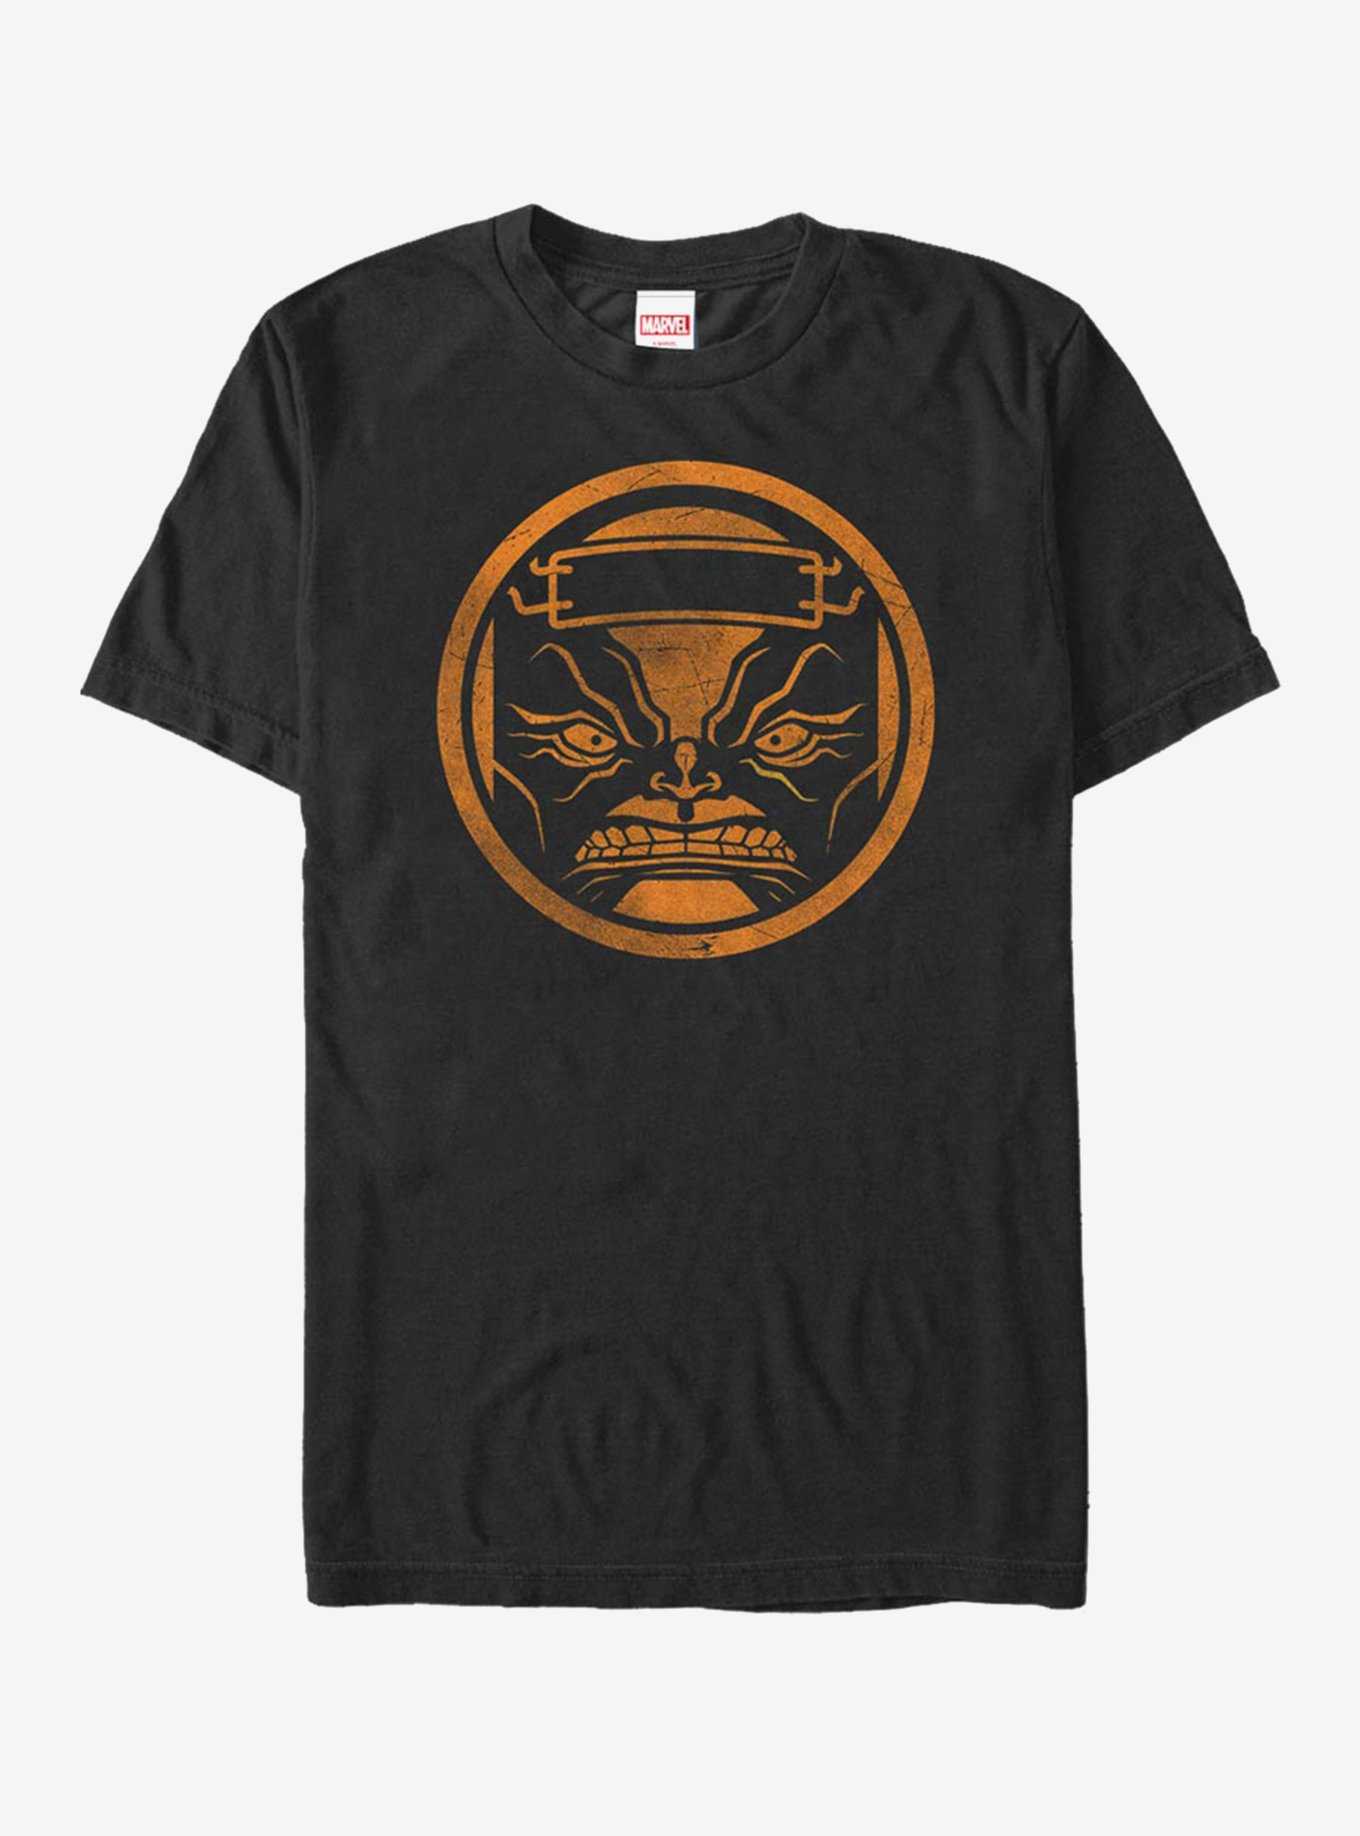 Marvel MODOK Orange Tint T-Shirt, , hi-res